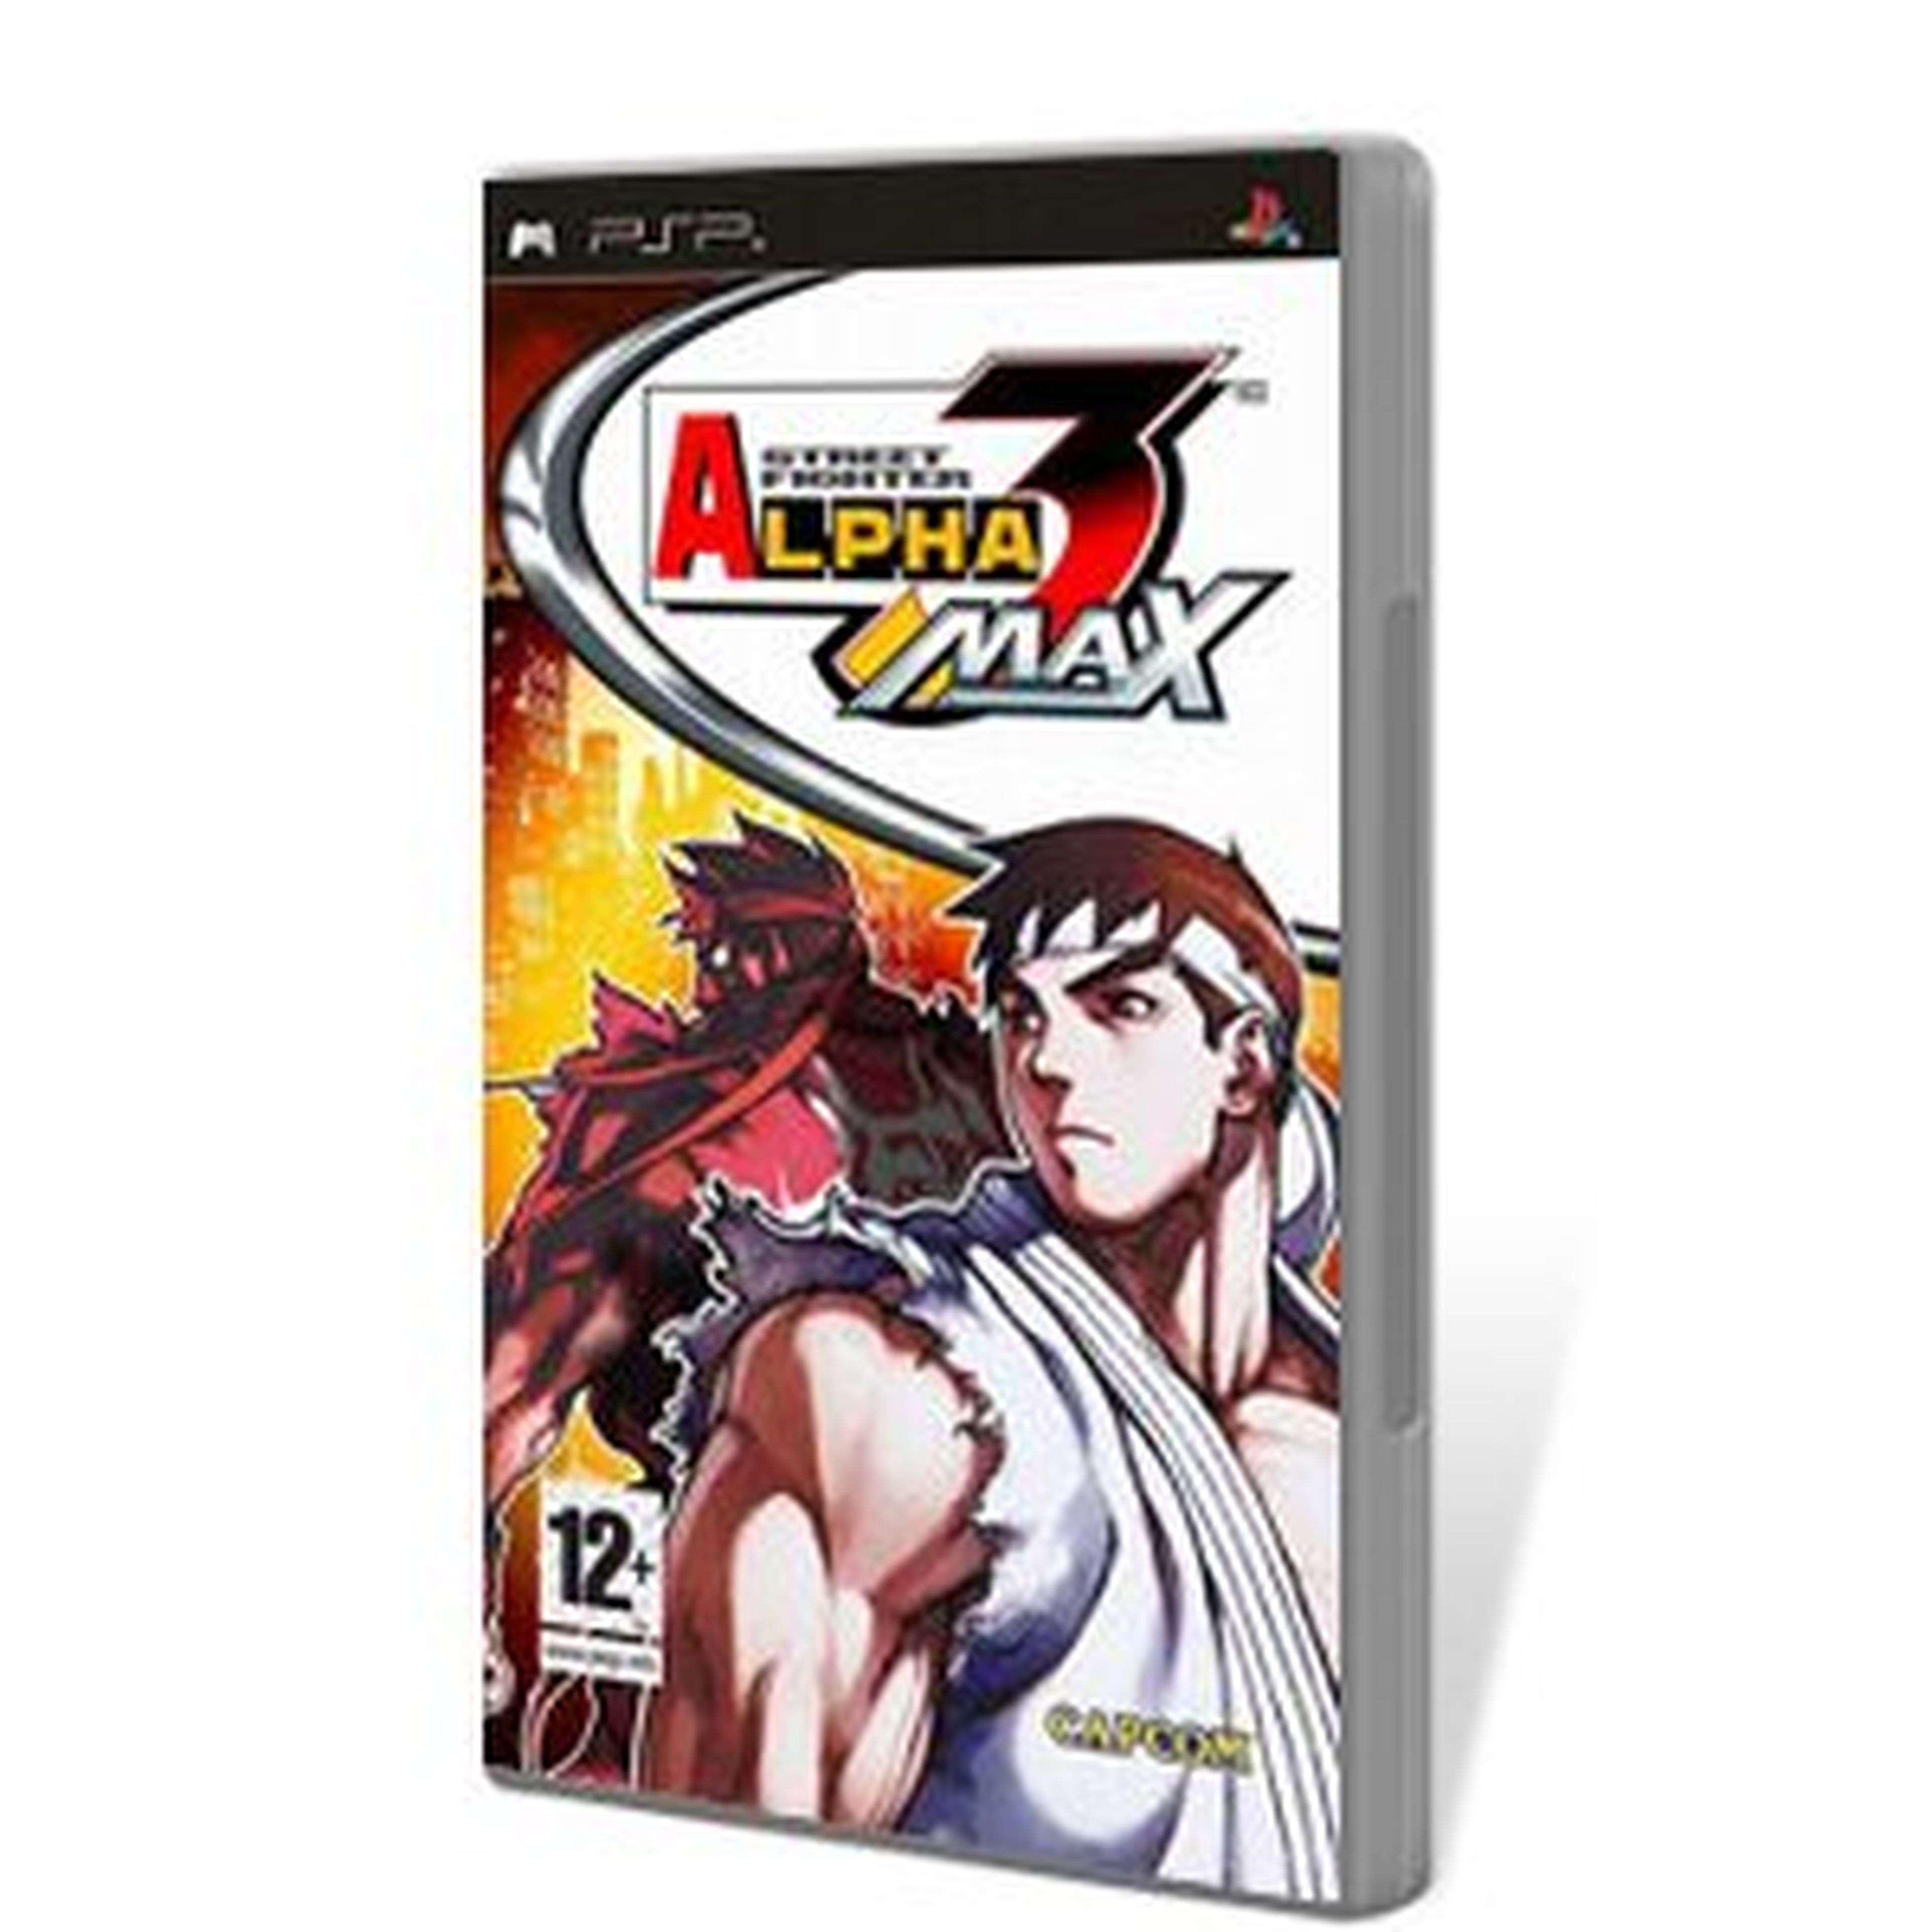 Street Fighter Alpha 3 Max para PSP